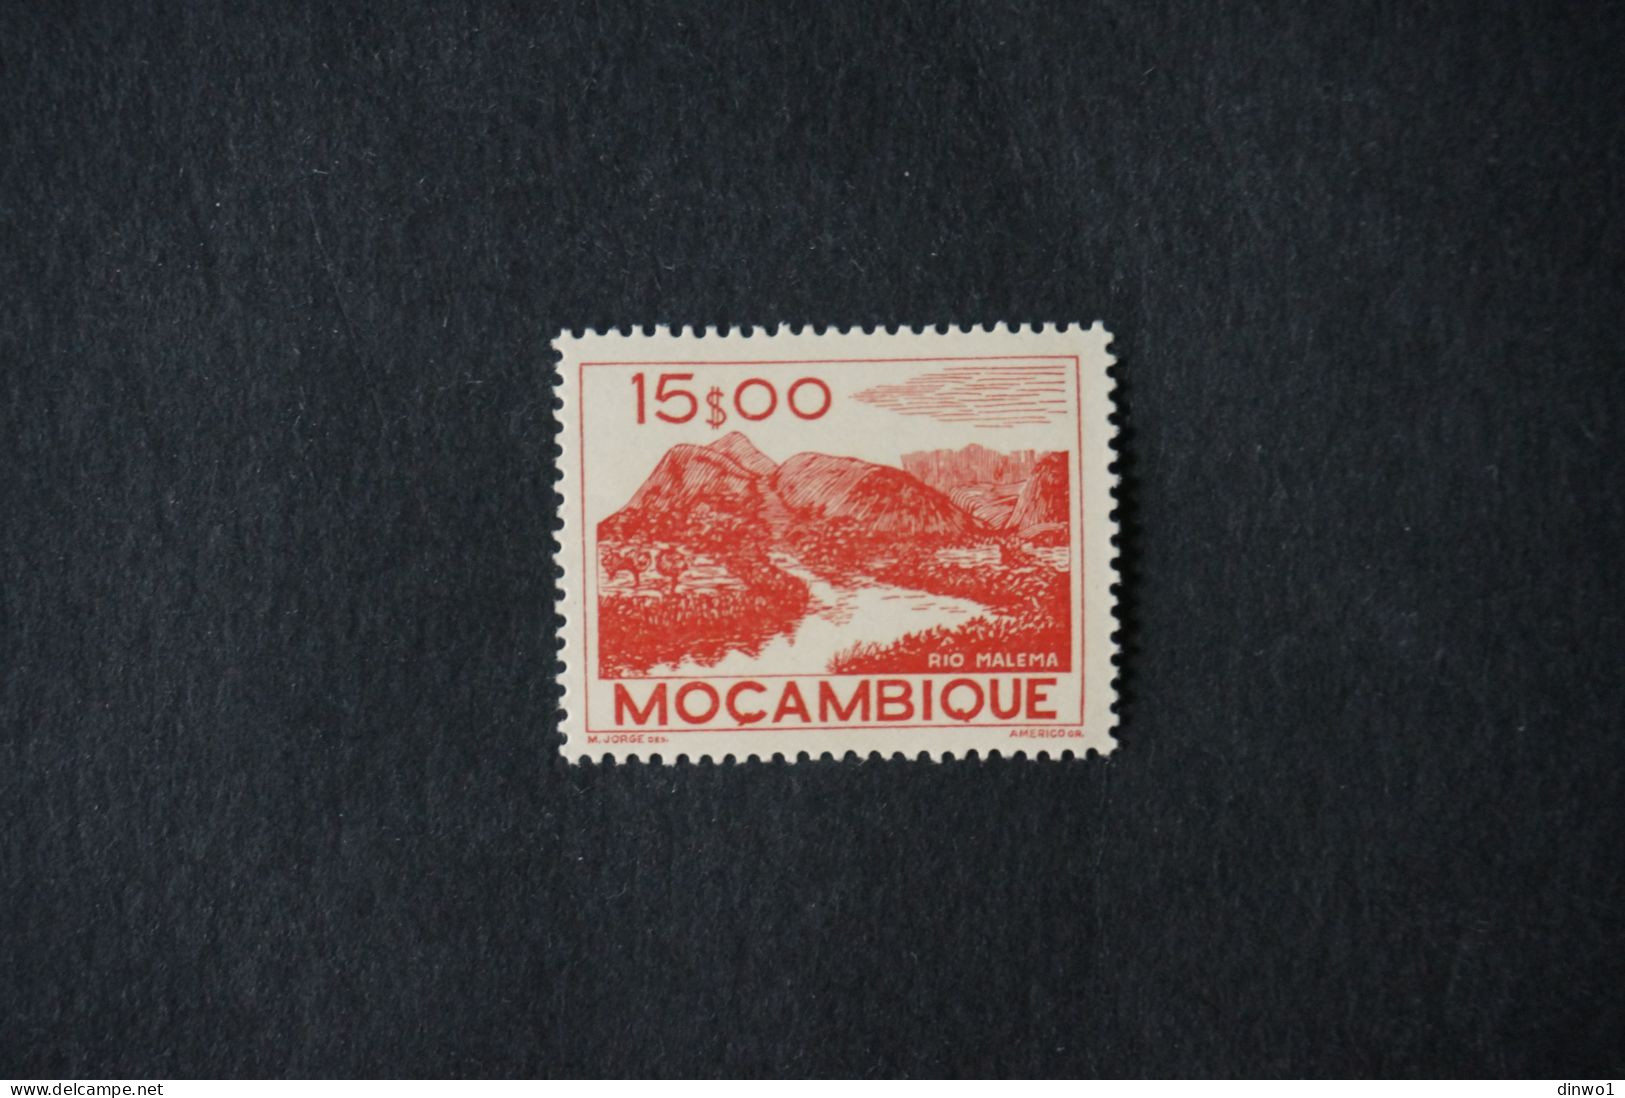 (T3) Mozambique - 1948 Local Views 15$00 - MNH - Mozambique